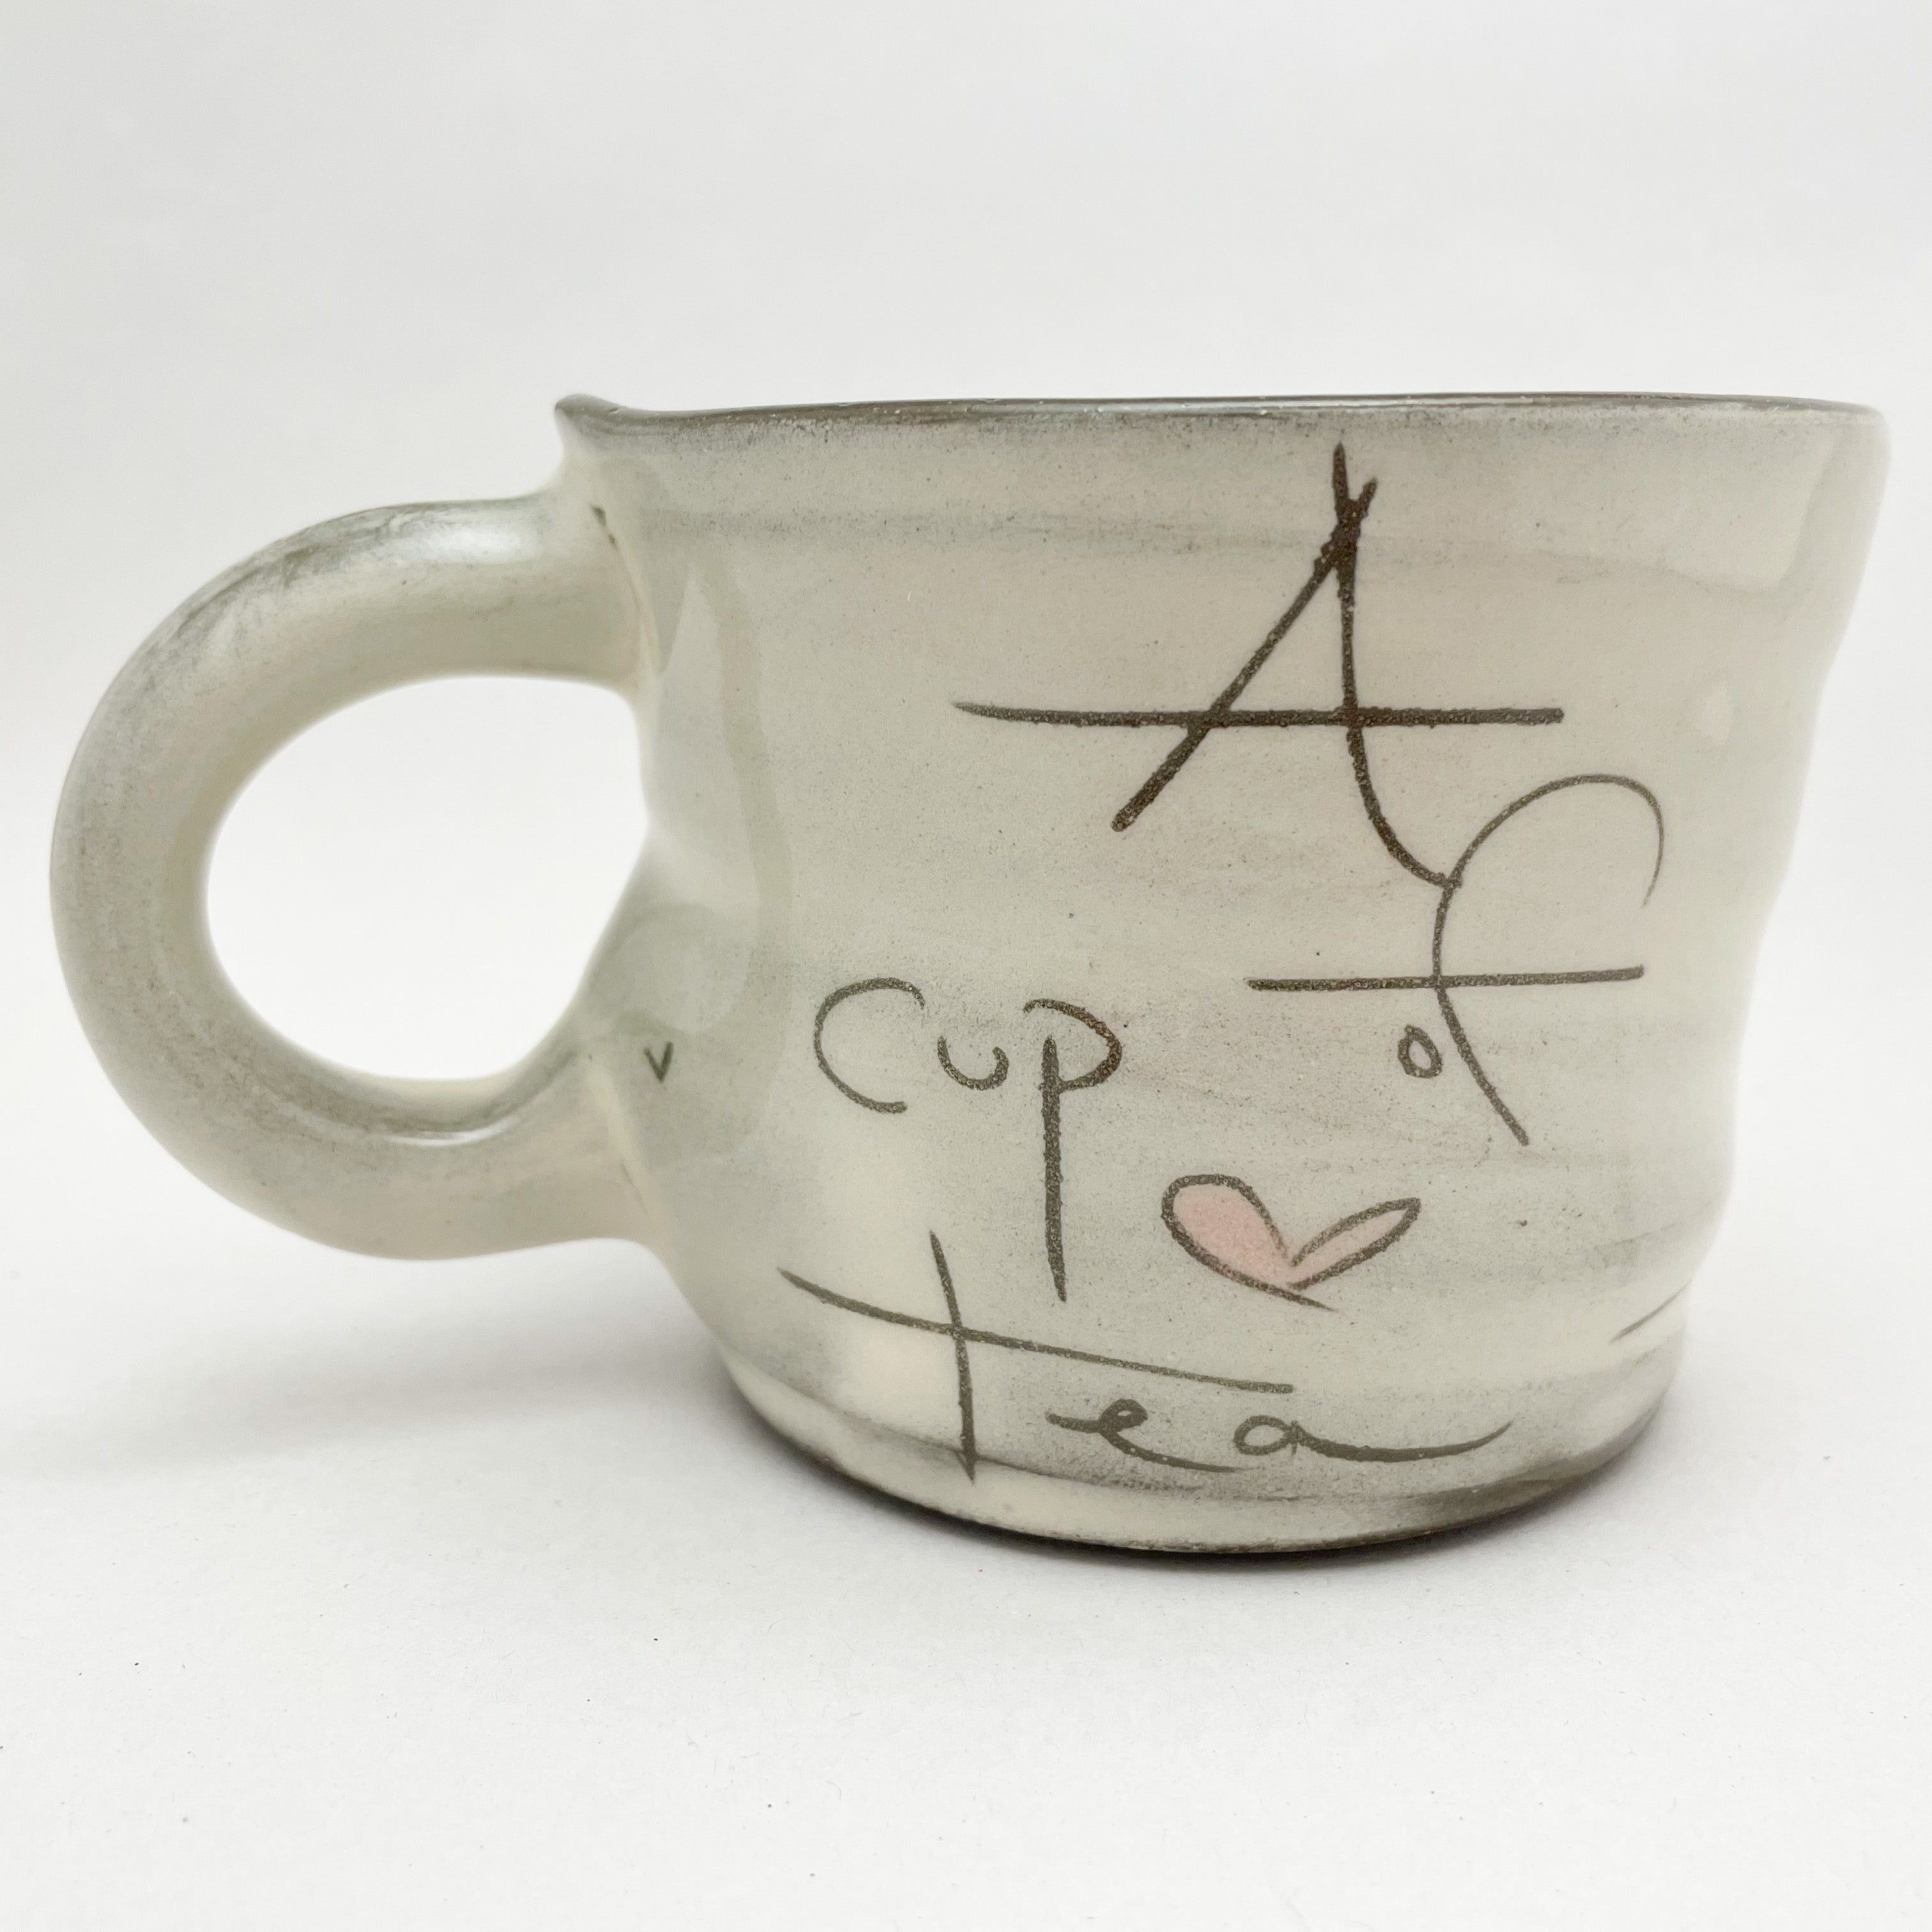 A CUP OF TEA MUG